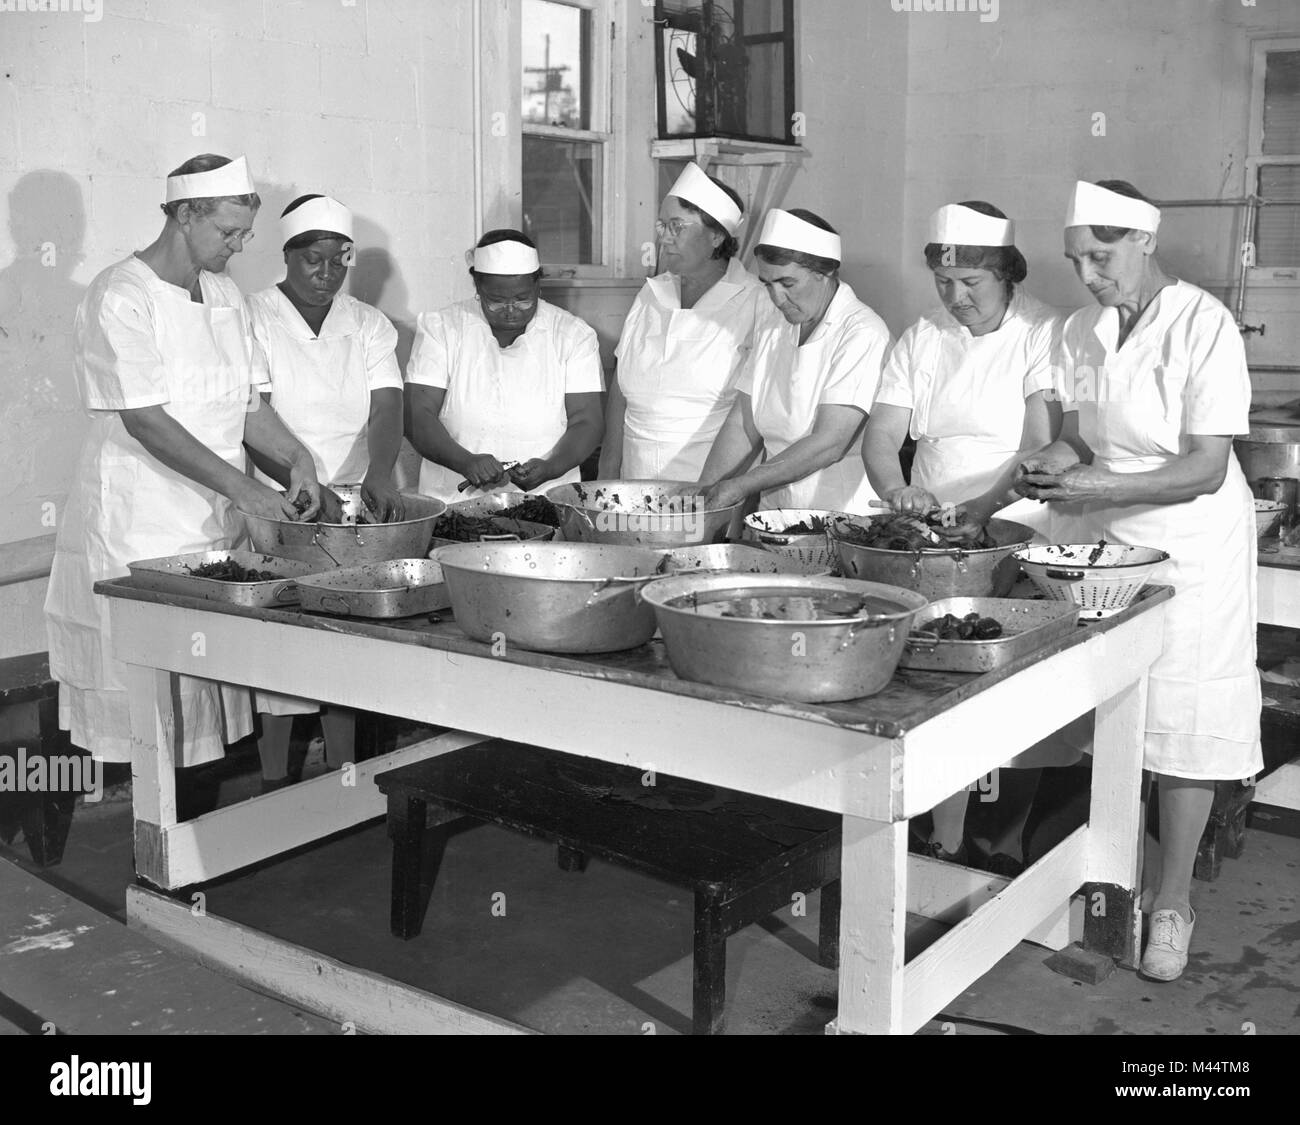 Cooks in a Chicago hotel kitchen prepare food, ca. 1958. Stock Photo